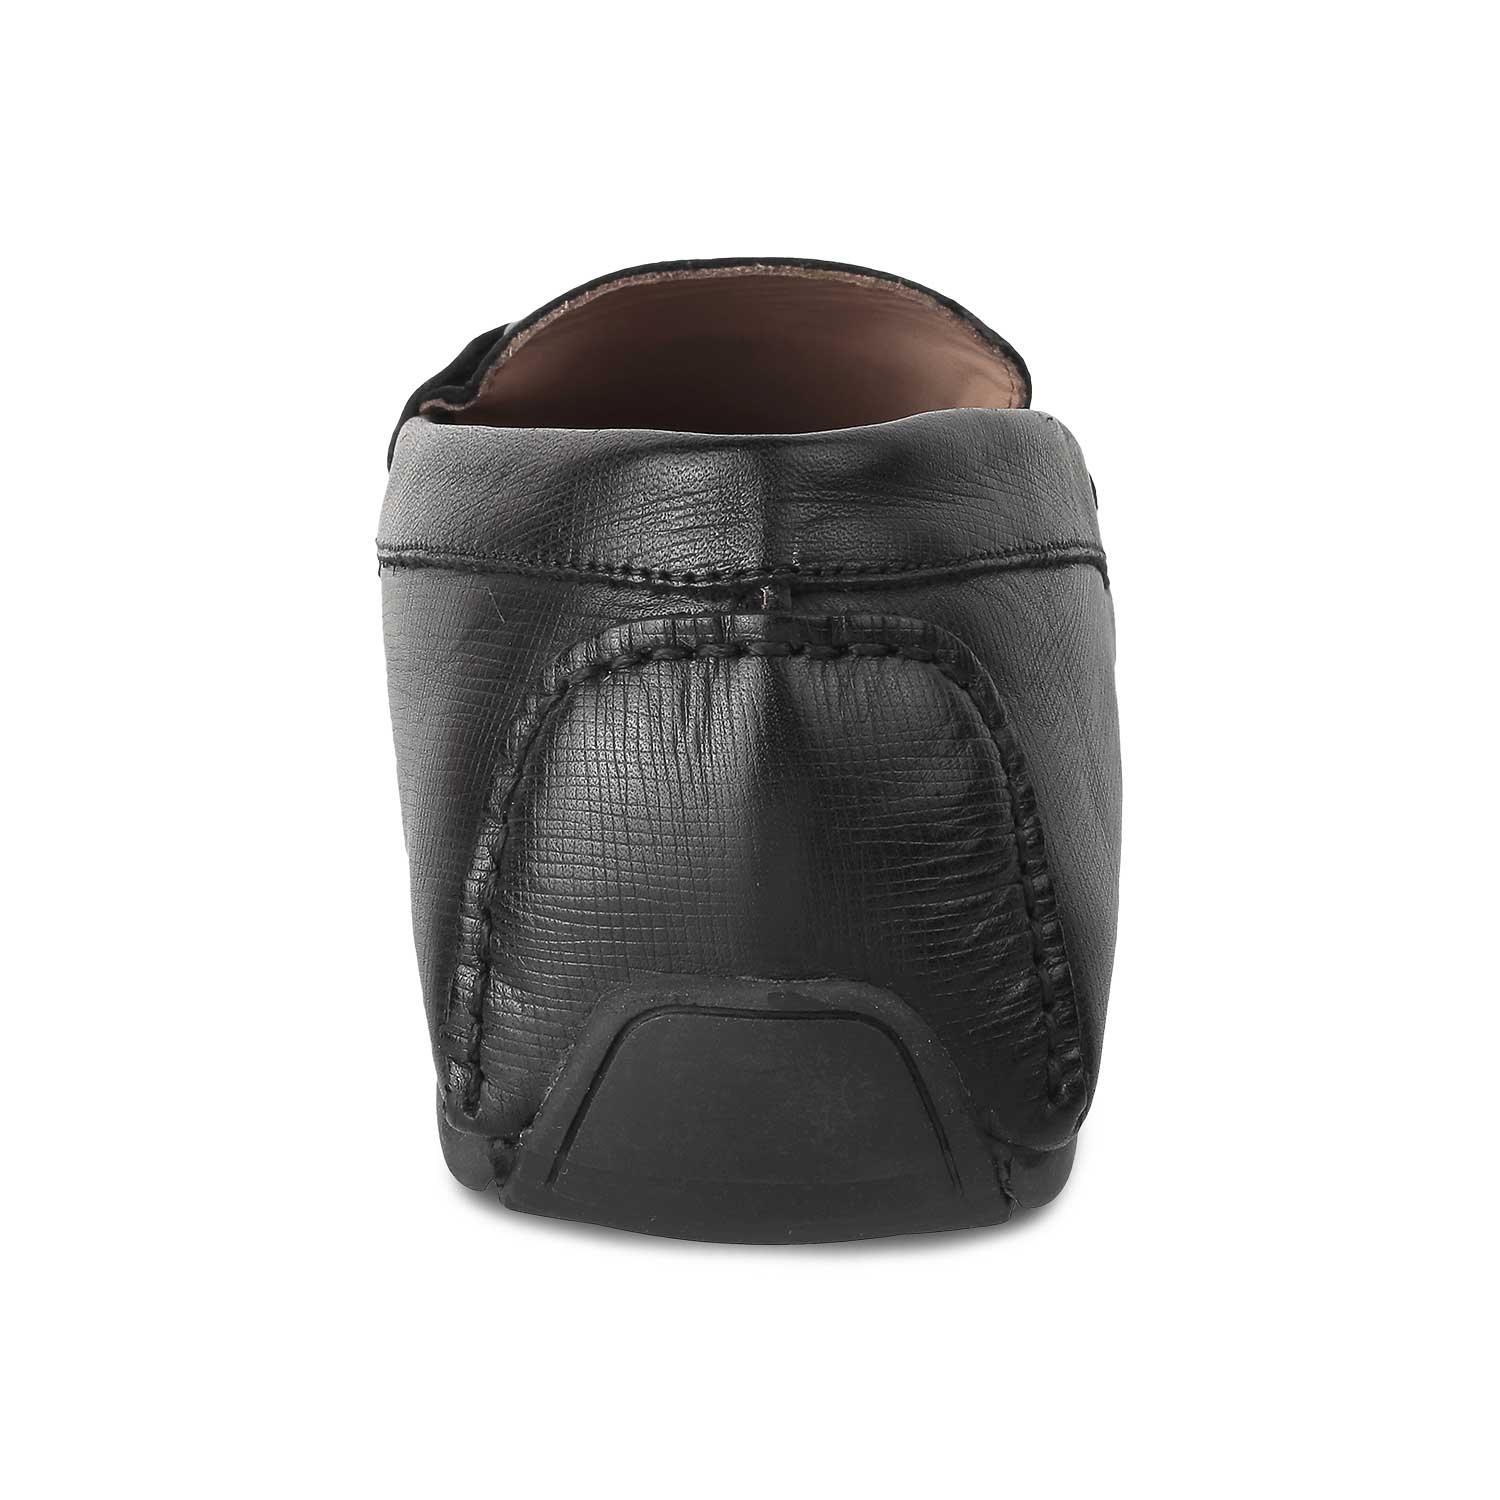 Namshi Black Leather Driving Loafers for Men Online at Tresmode